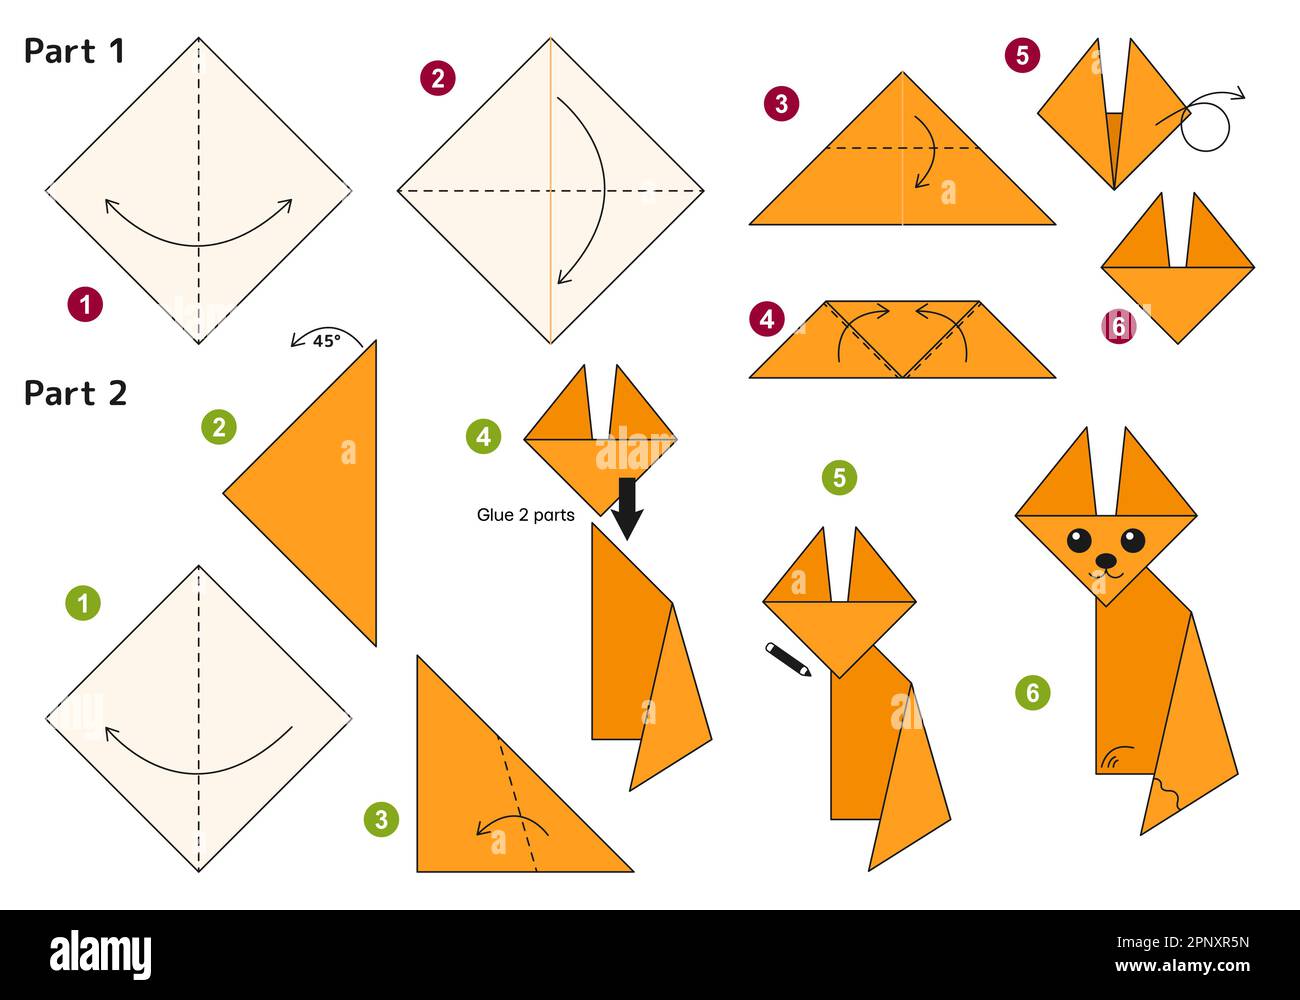 Origami tutorial for kids. Origami cute fox. Stock Vector